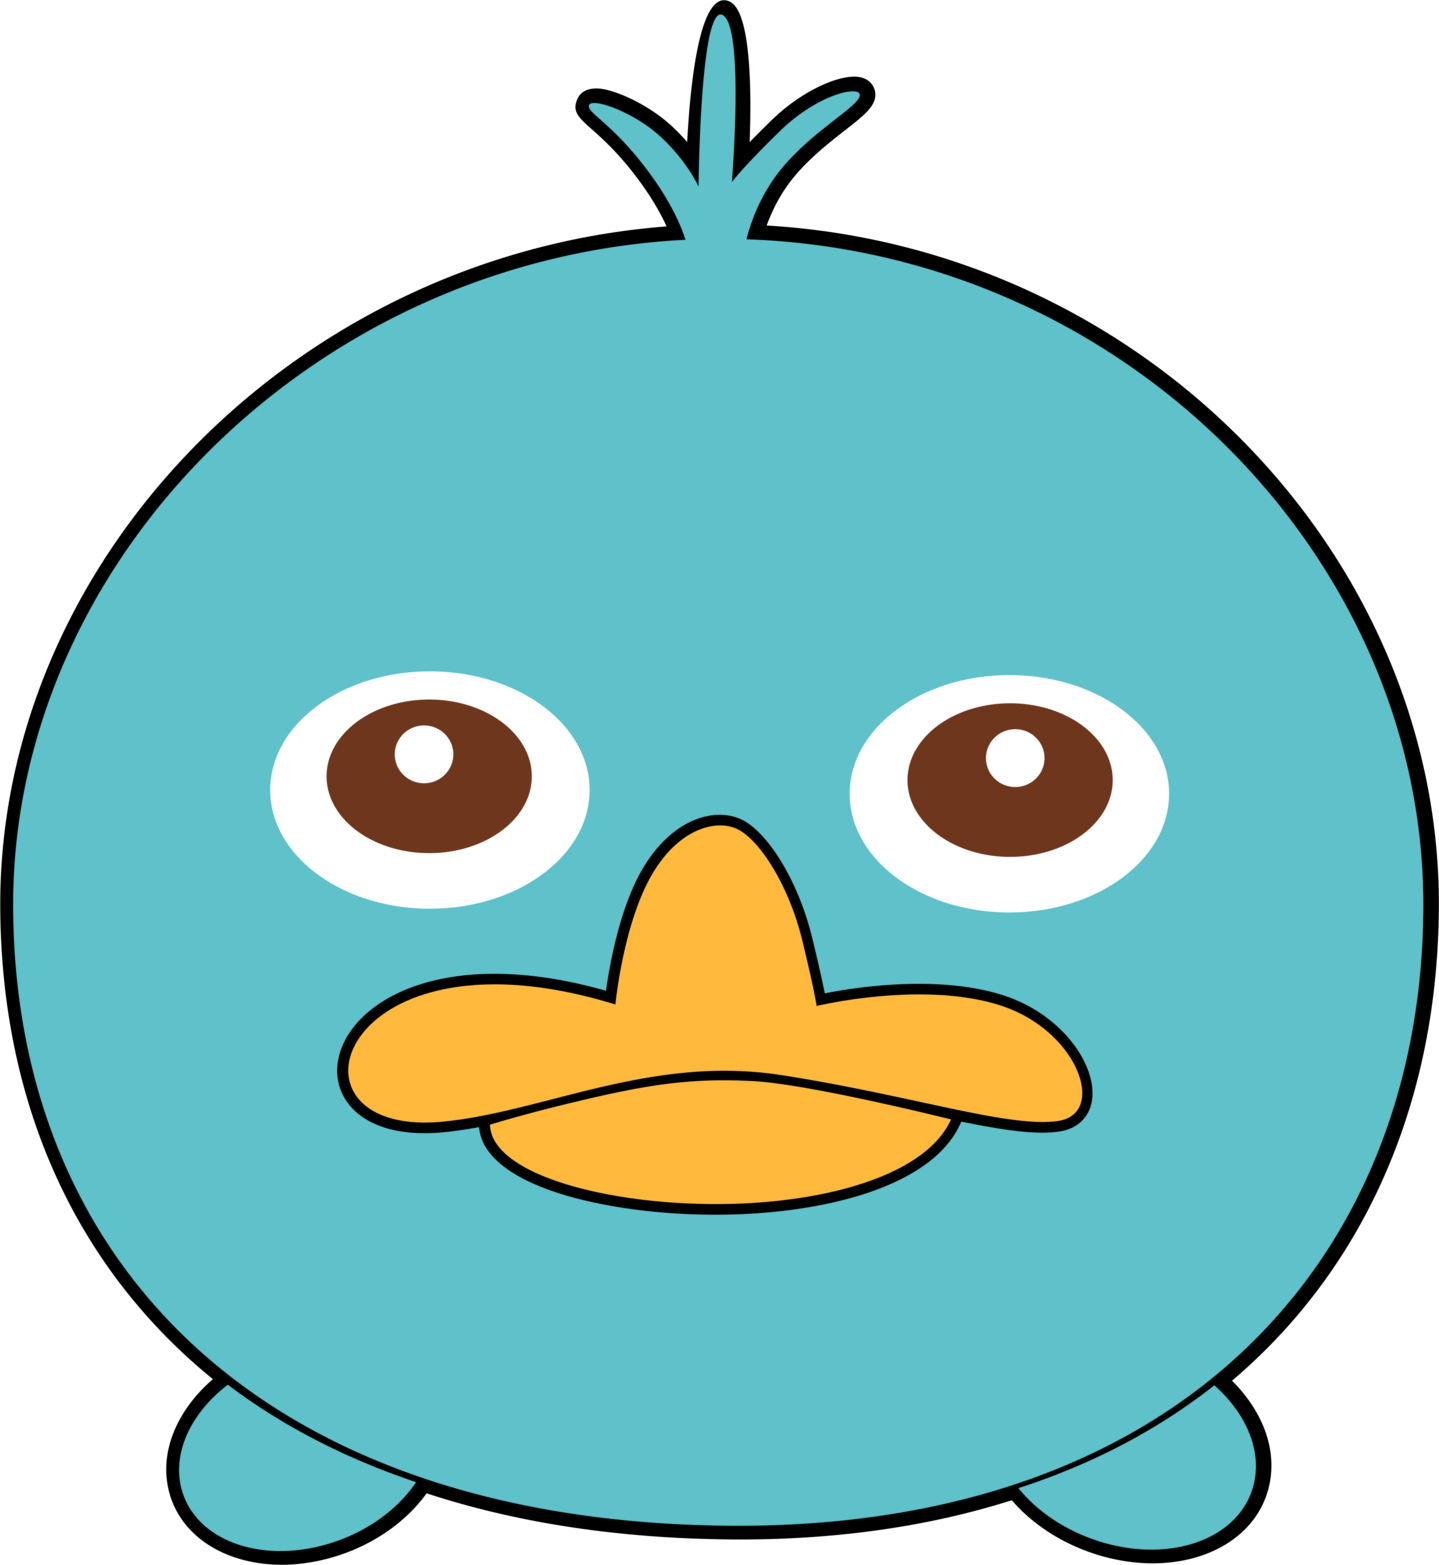 A Cartoon Blue Bird With Brown Eyes And A Yellow Beak